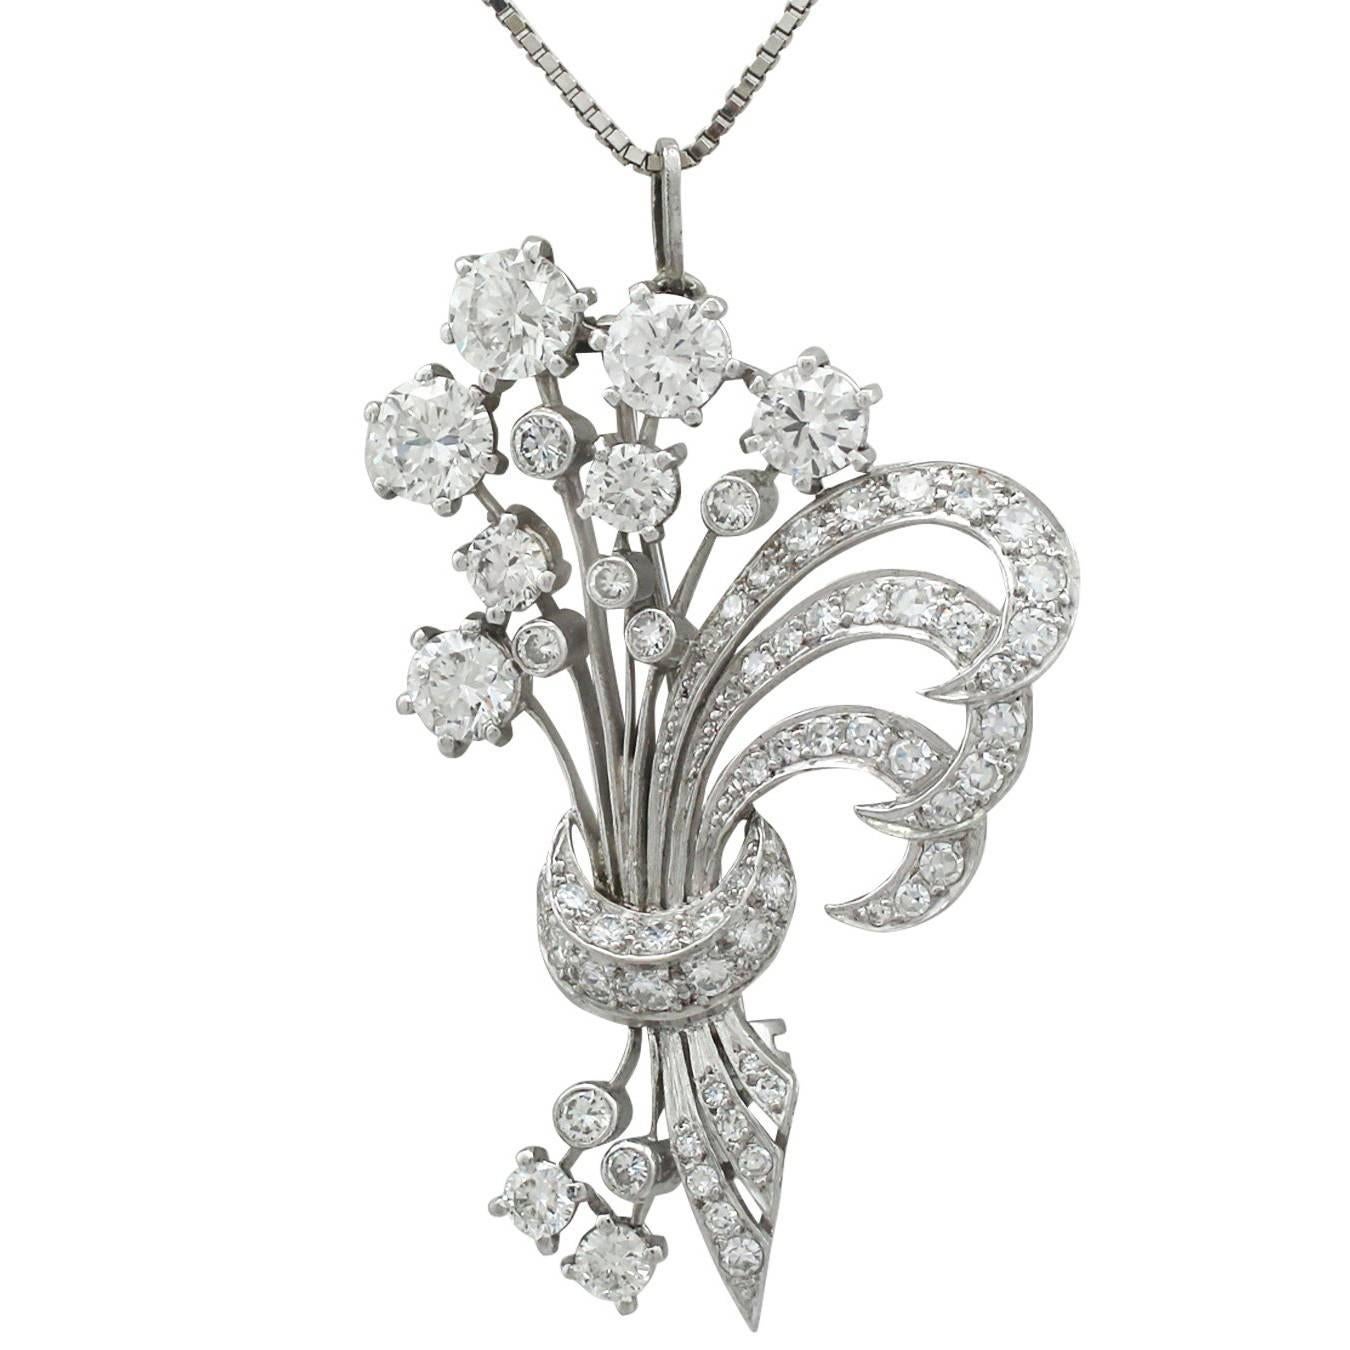 1950s 4.98 Carat Diamond and Platinum Flower Spray Brooch / Pendant